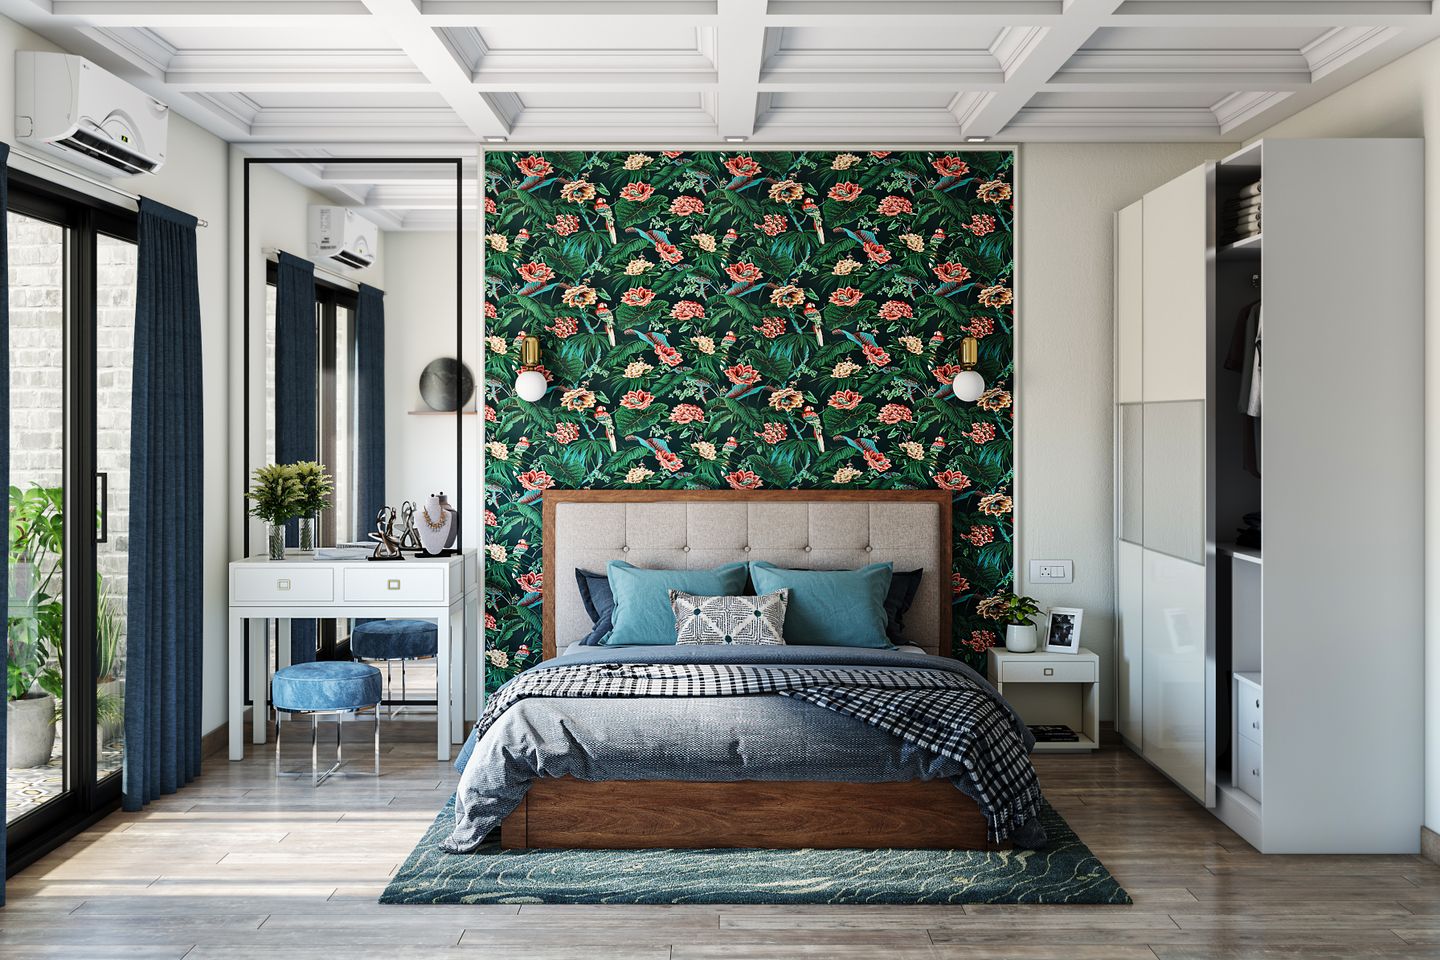 Modern Master Bedroom With Floral Wallpaper - Livspace